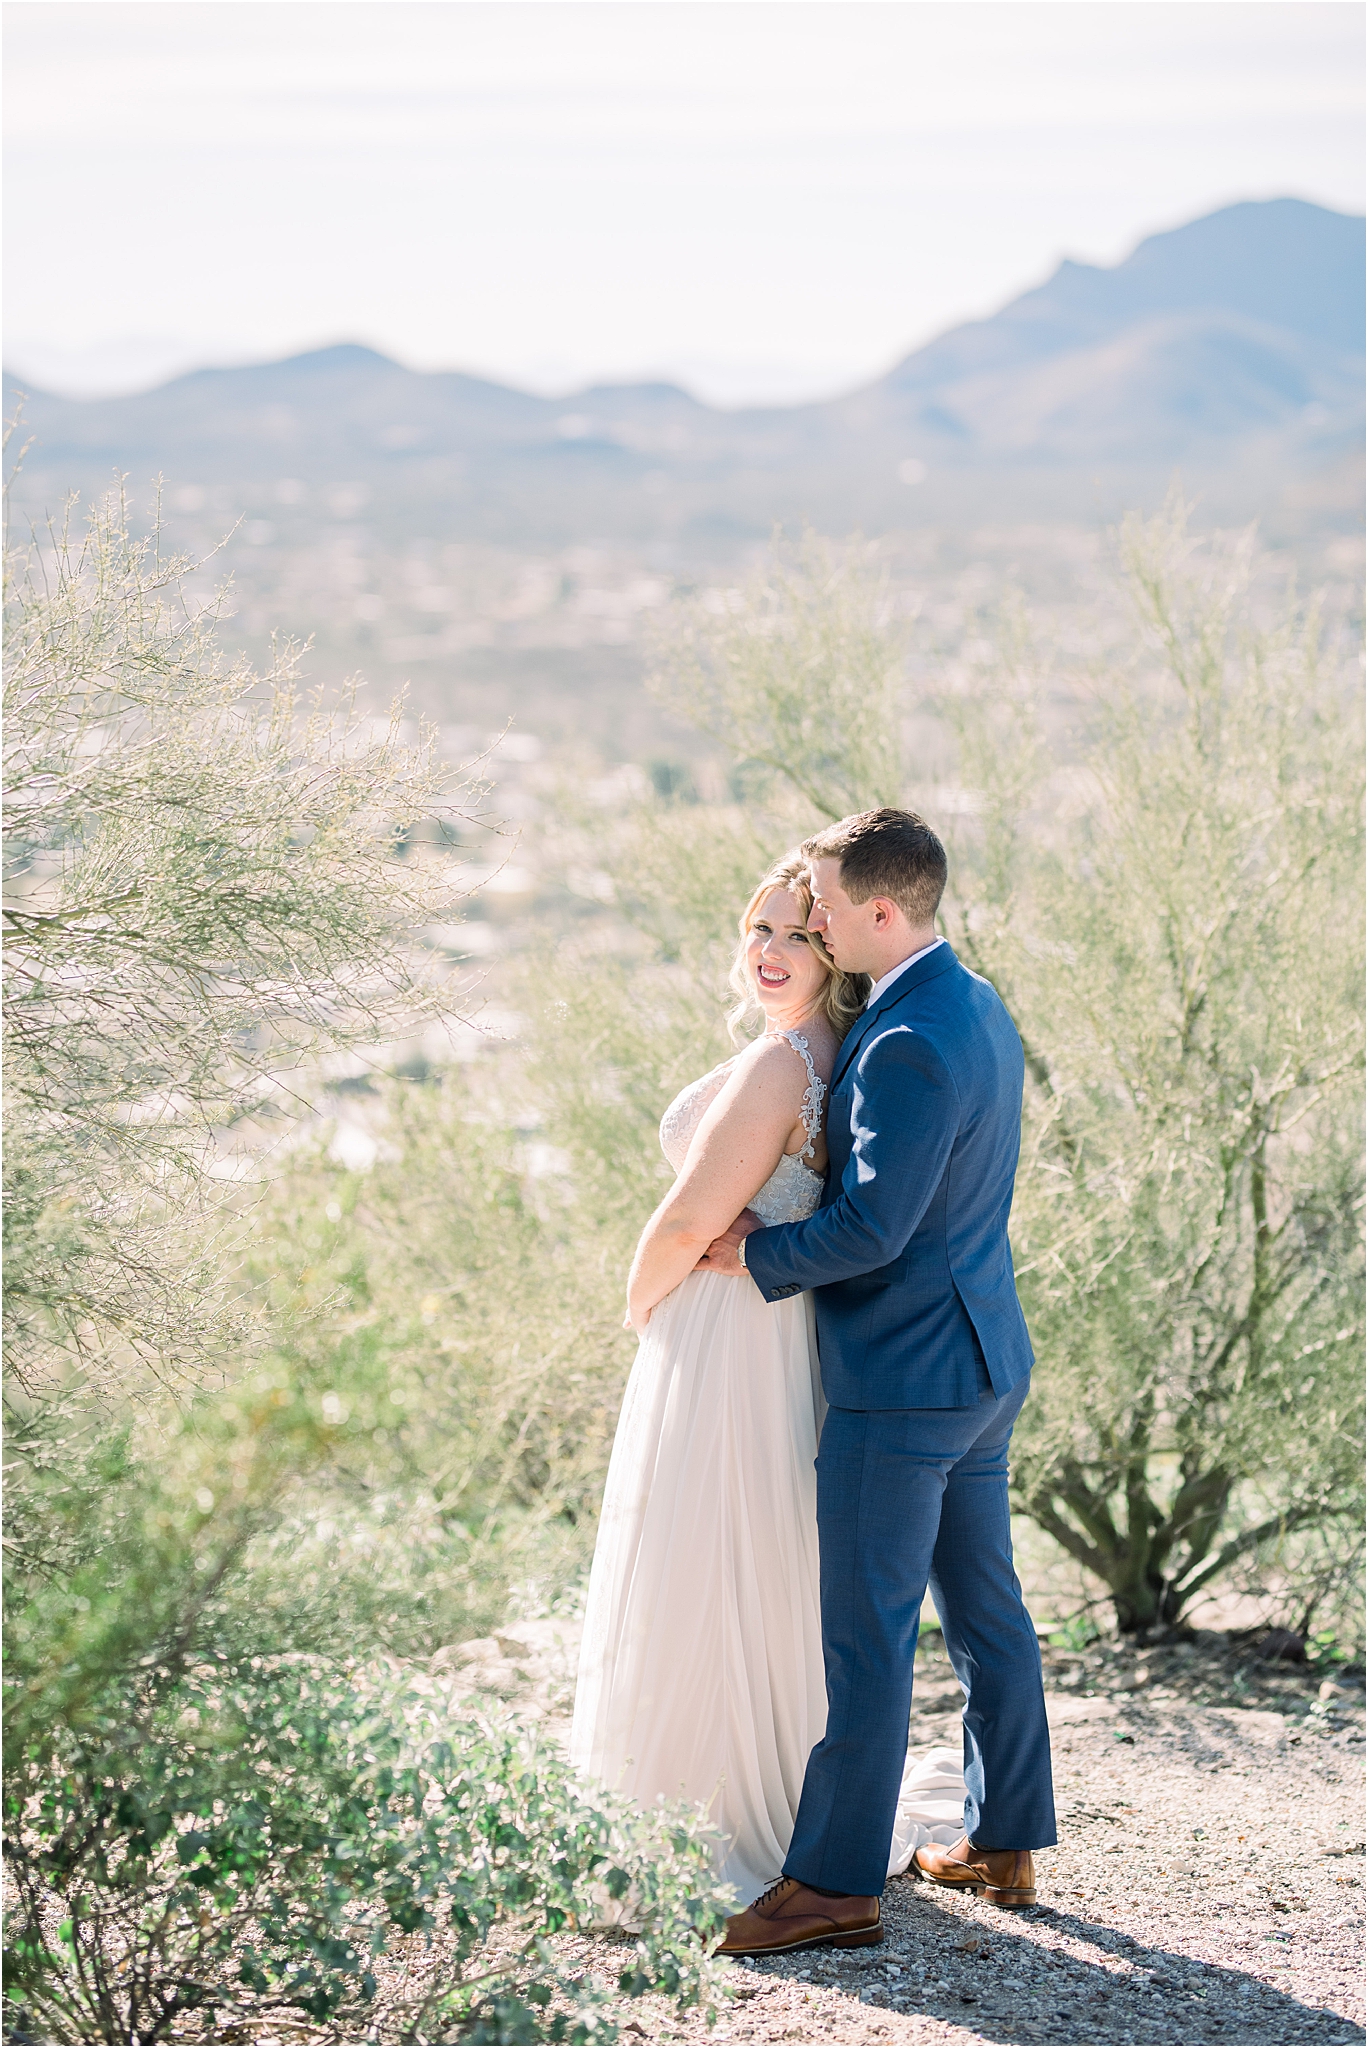 Stillwell House Wedding Tucson AZ Jessica and Dan first look photos | Tucson Wedding Photographer | West End Photography